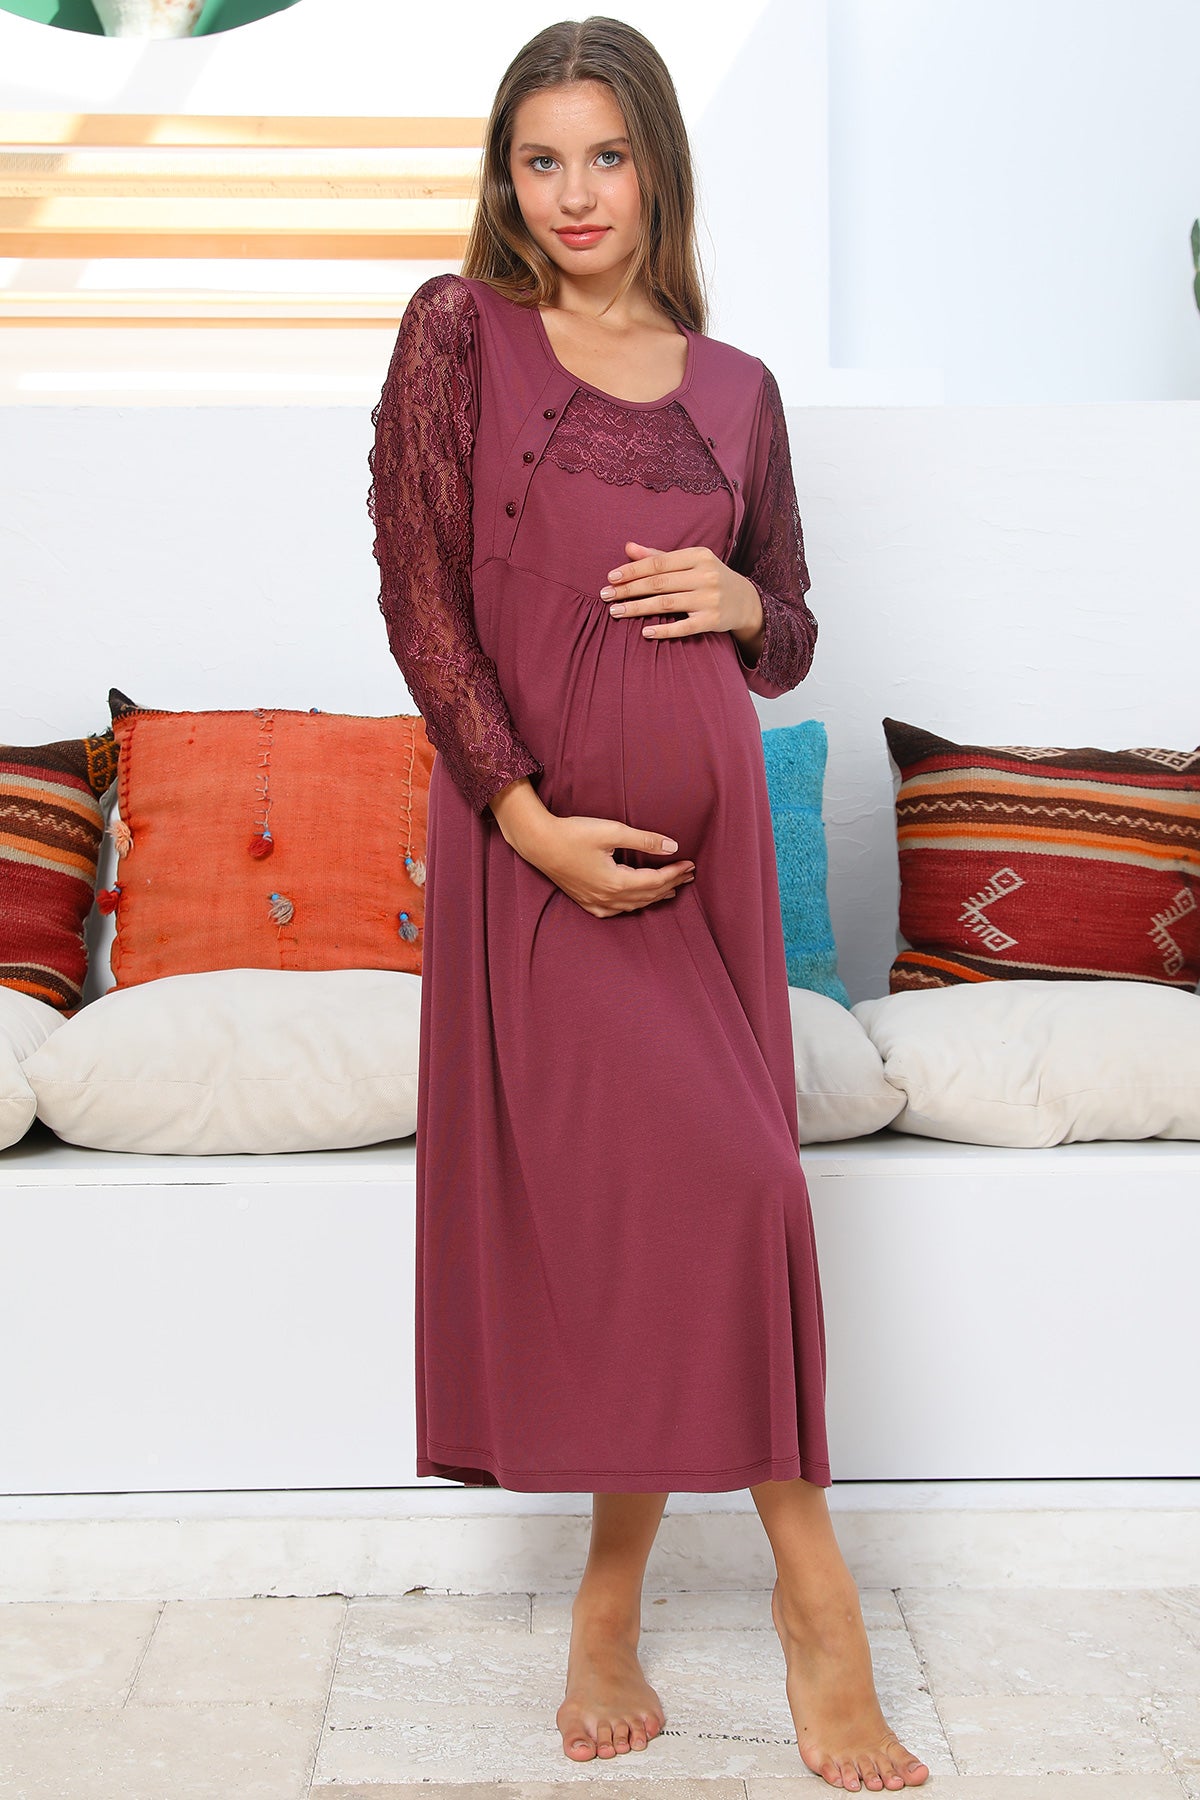 Shopymommy 703103 Elegance Welsoft Lace Sleeves 4 Pieces Maternity & Nursing Set Plum